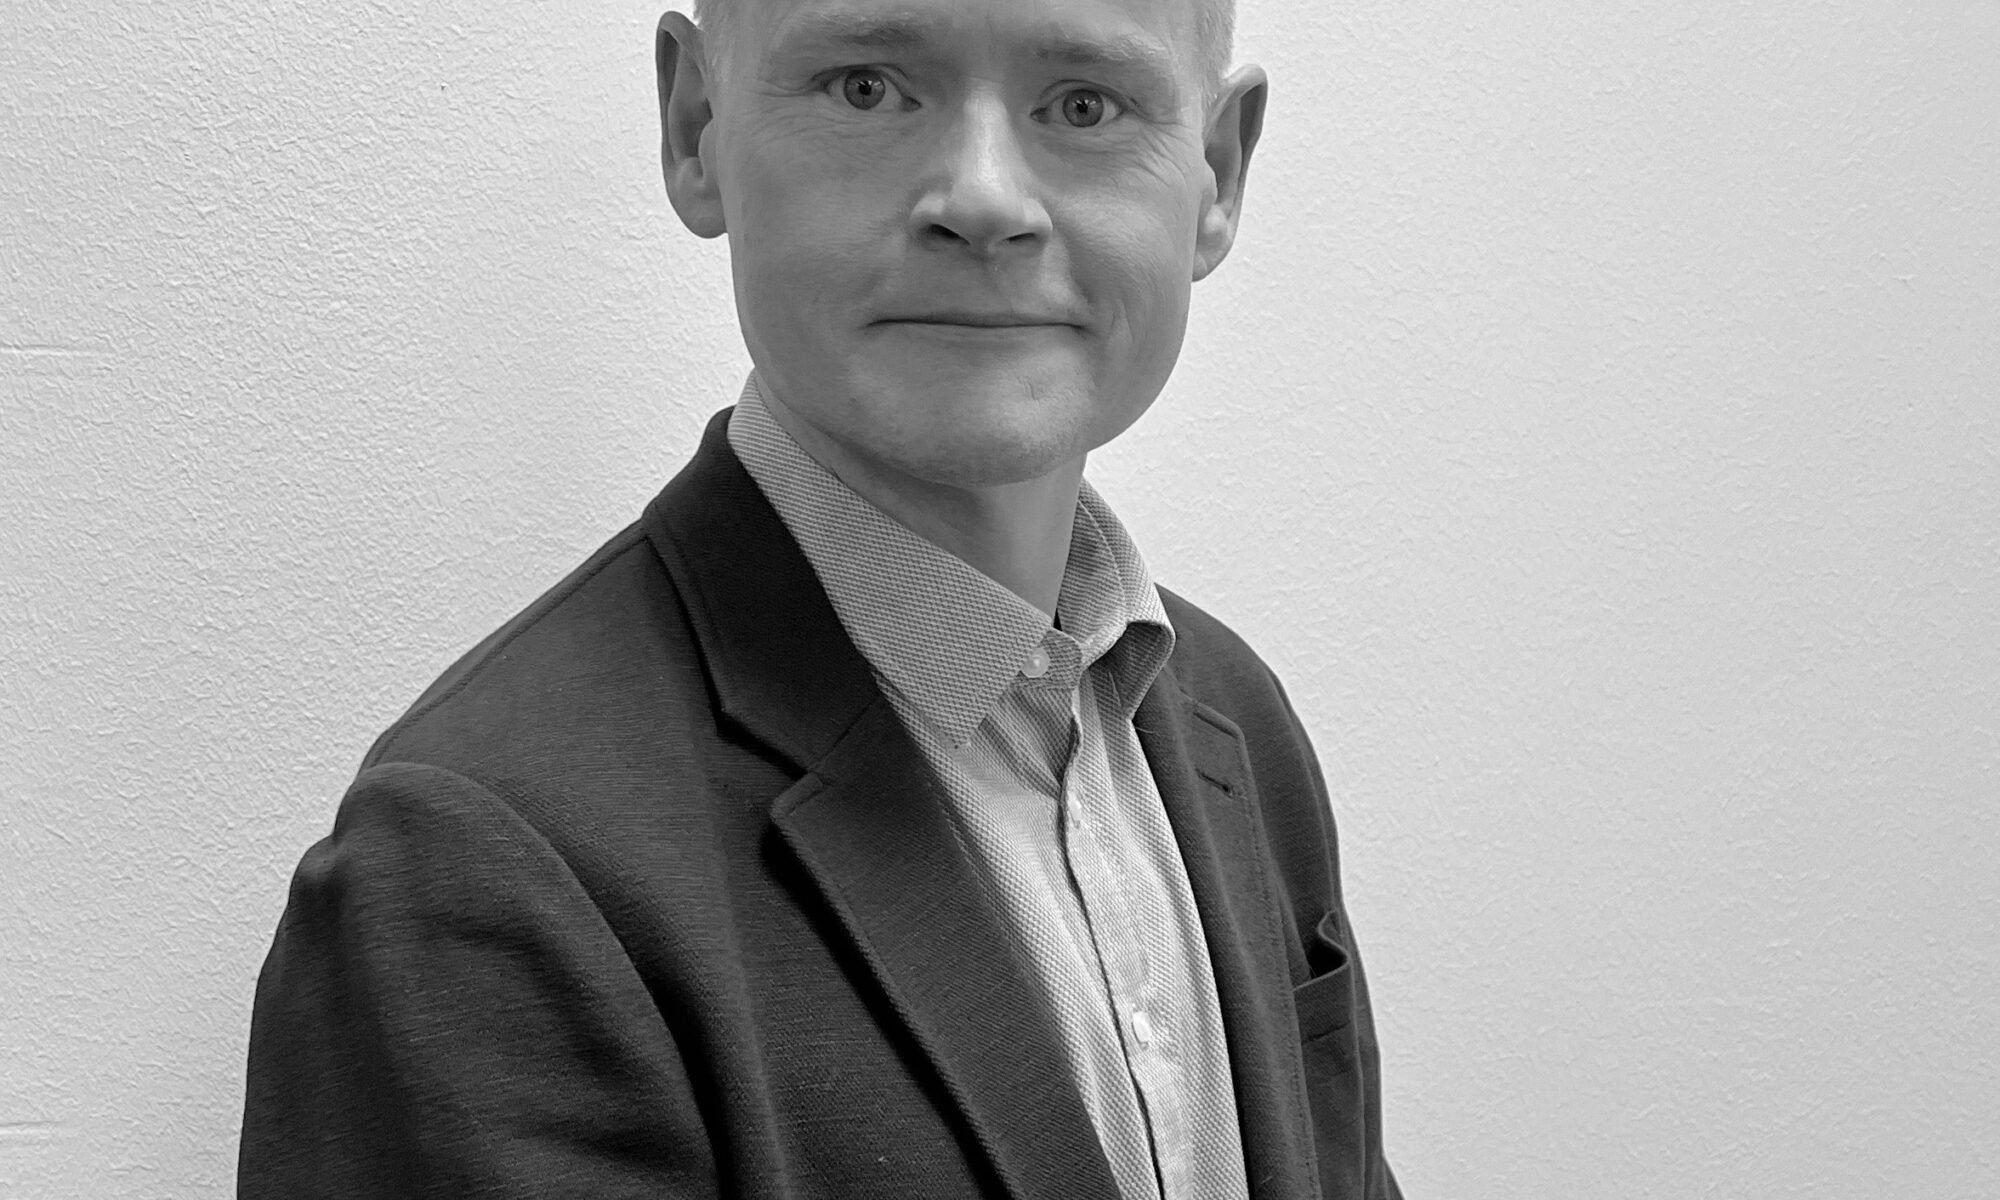 Karsten Pedersen, Partner, Specialist i M&A